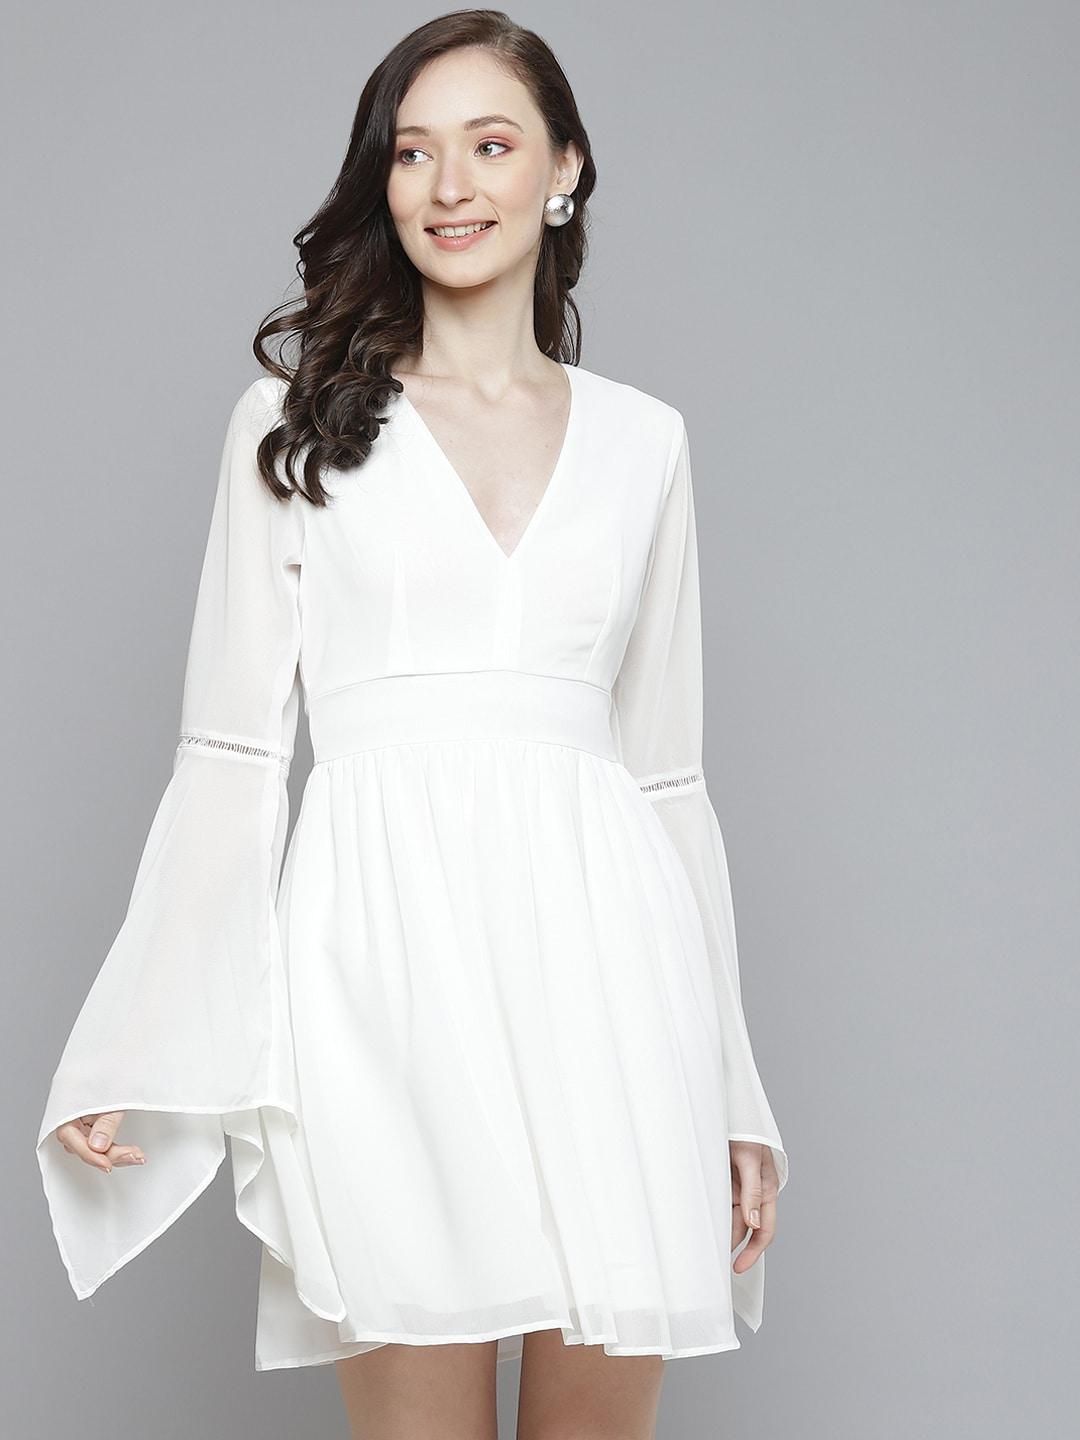 sassafras-women-white-solid-bell-sleeves-a-line-dress